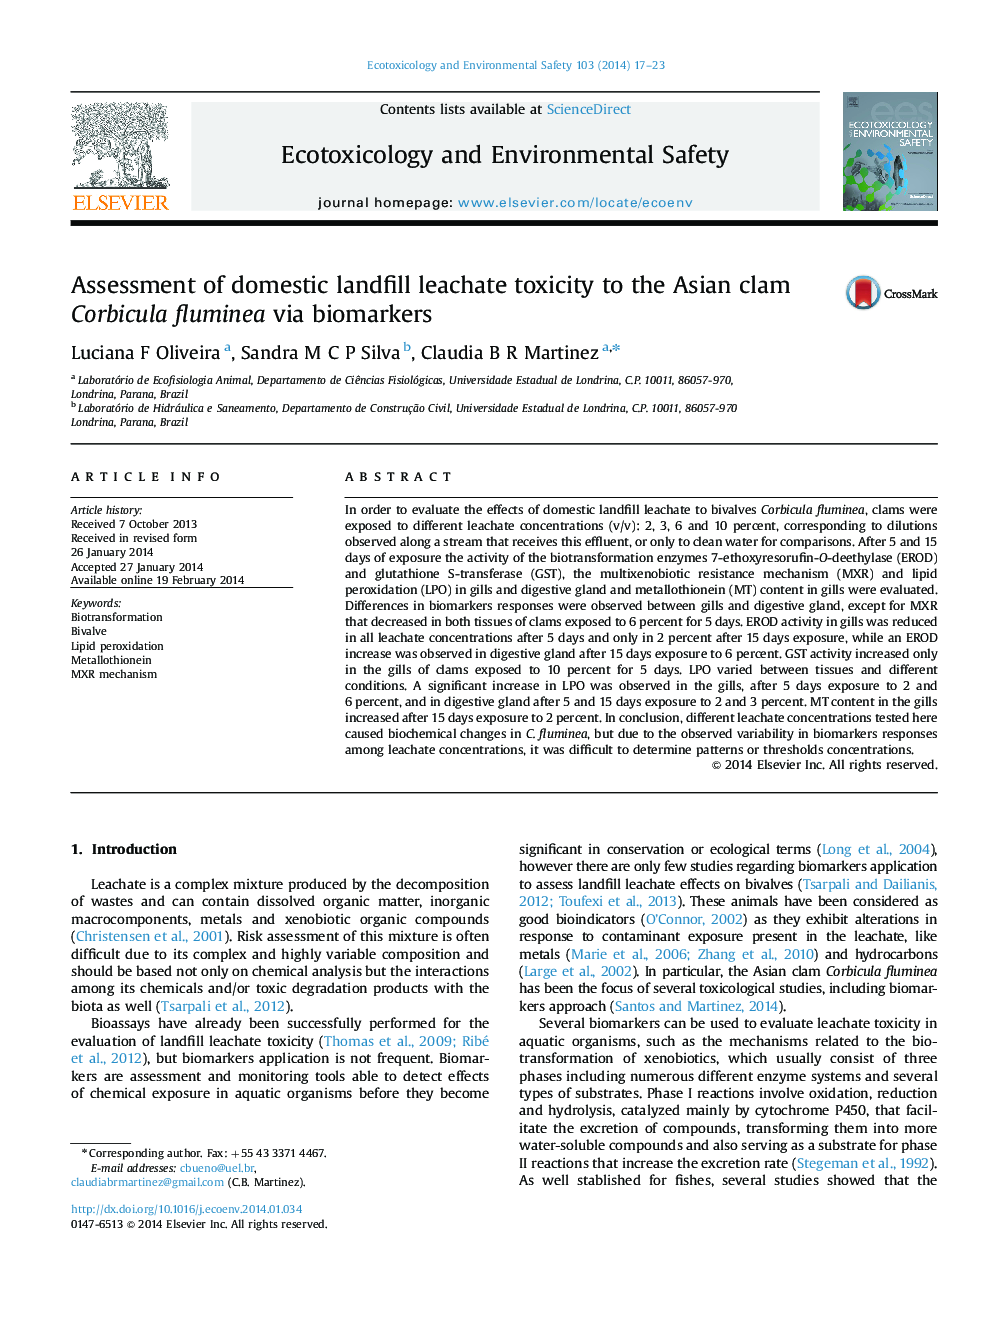 Assessment of domestic landfill leachate toxicity to the Asian clam Corbicula fluminea via biomarkers